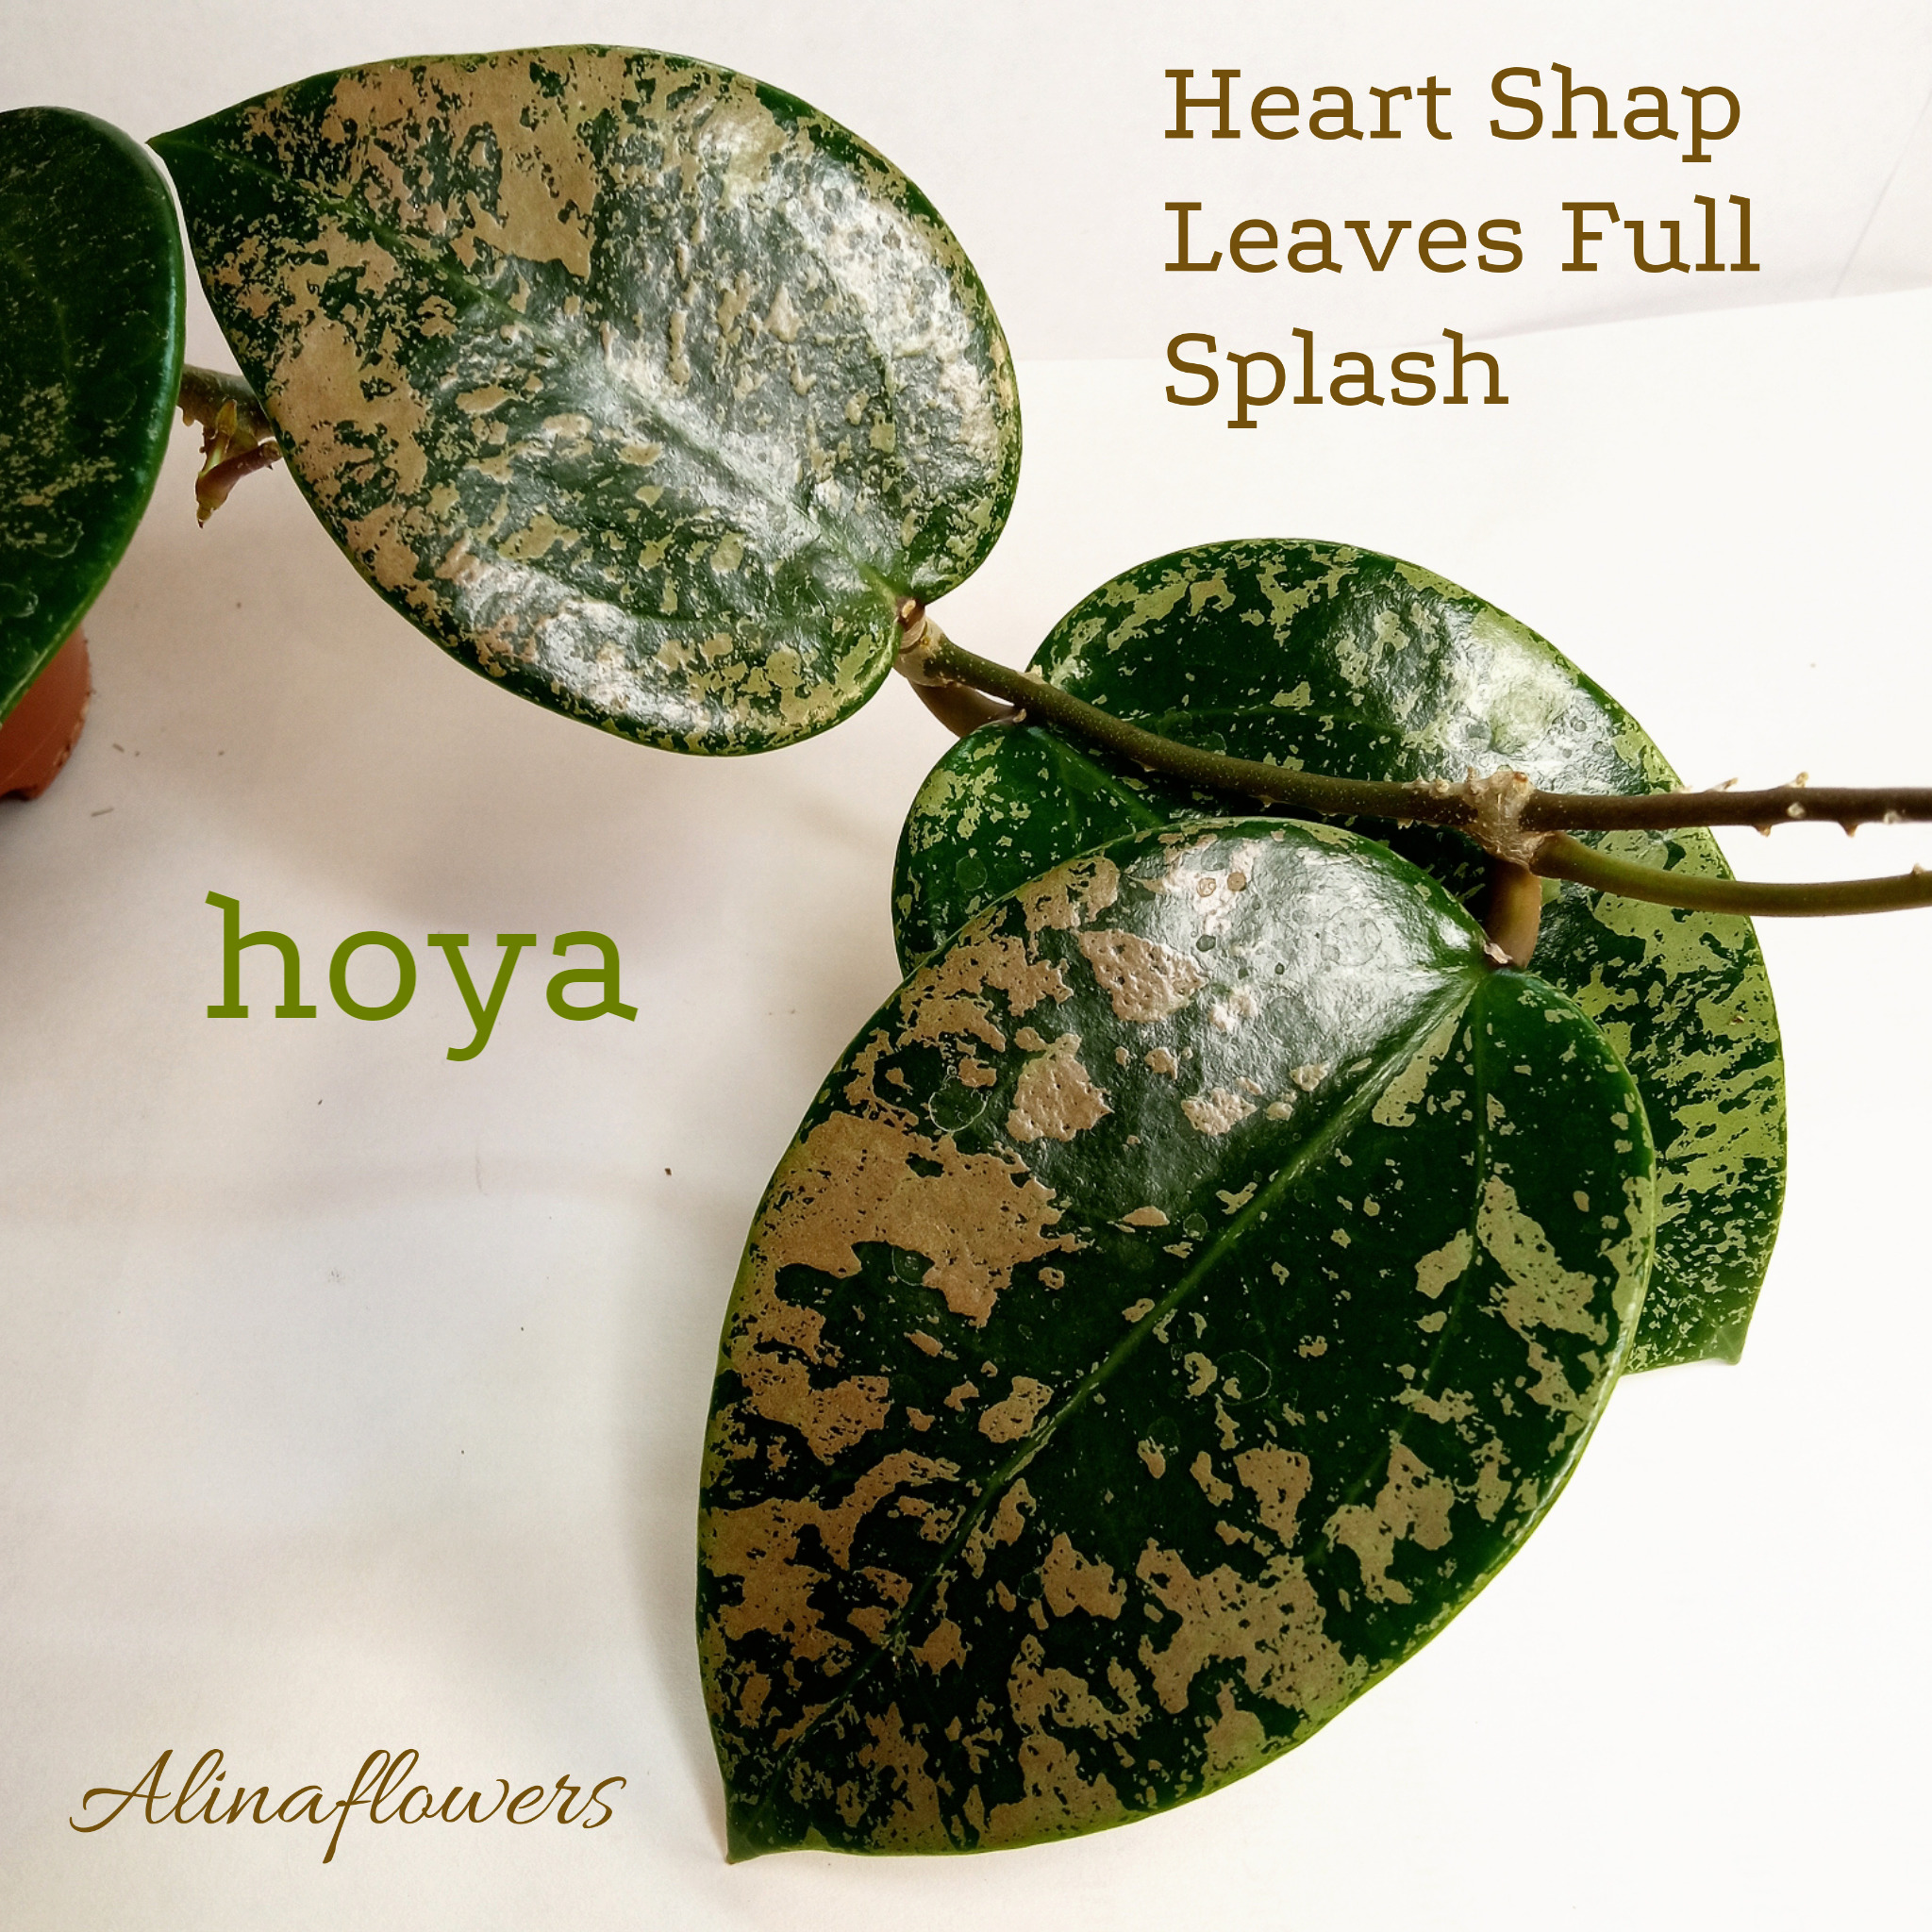 Hoya carnosa "Heart Shap Leaves Full Splash"